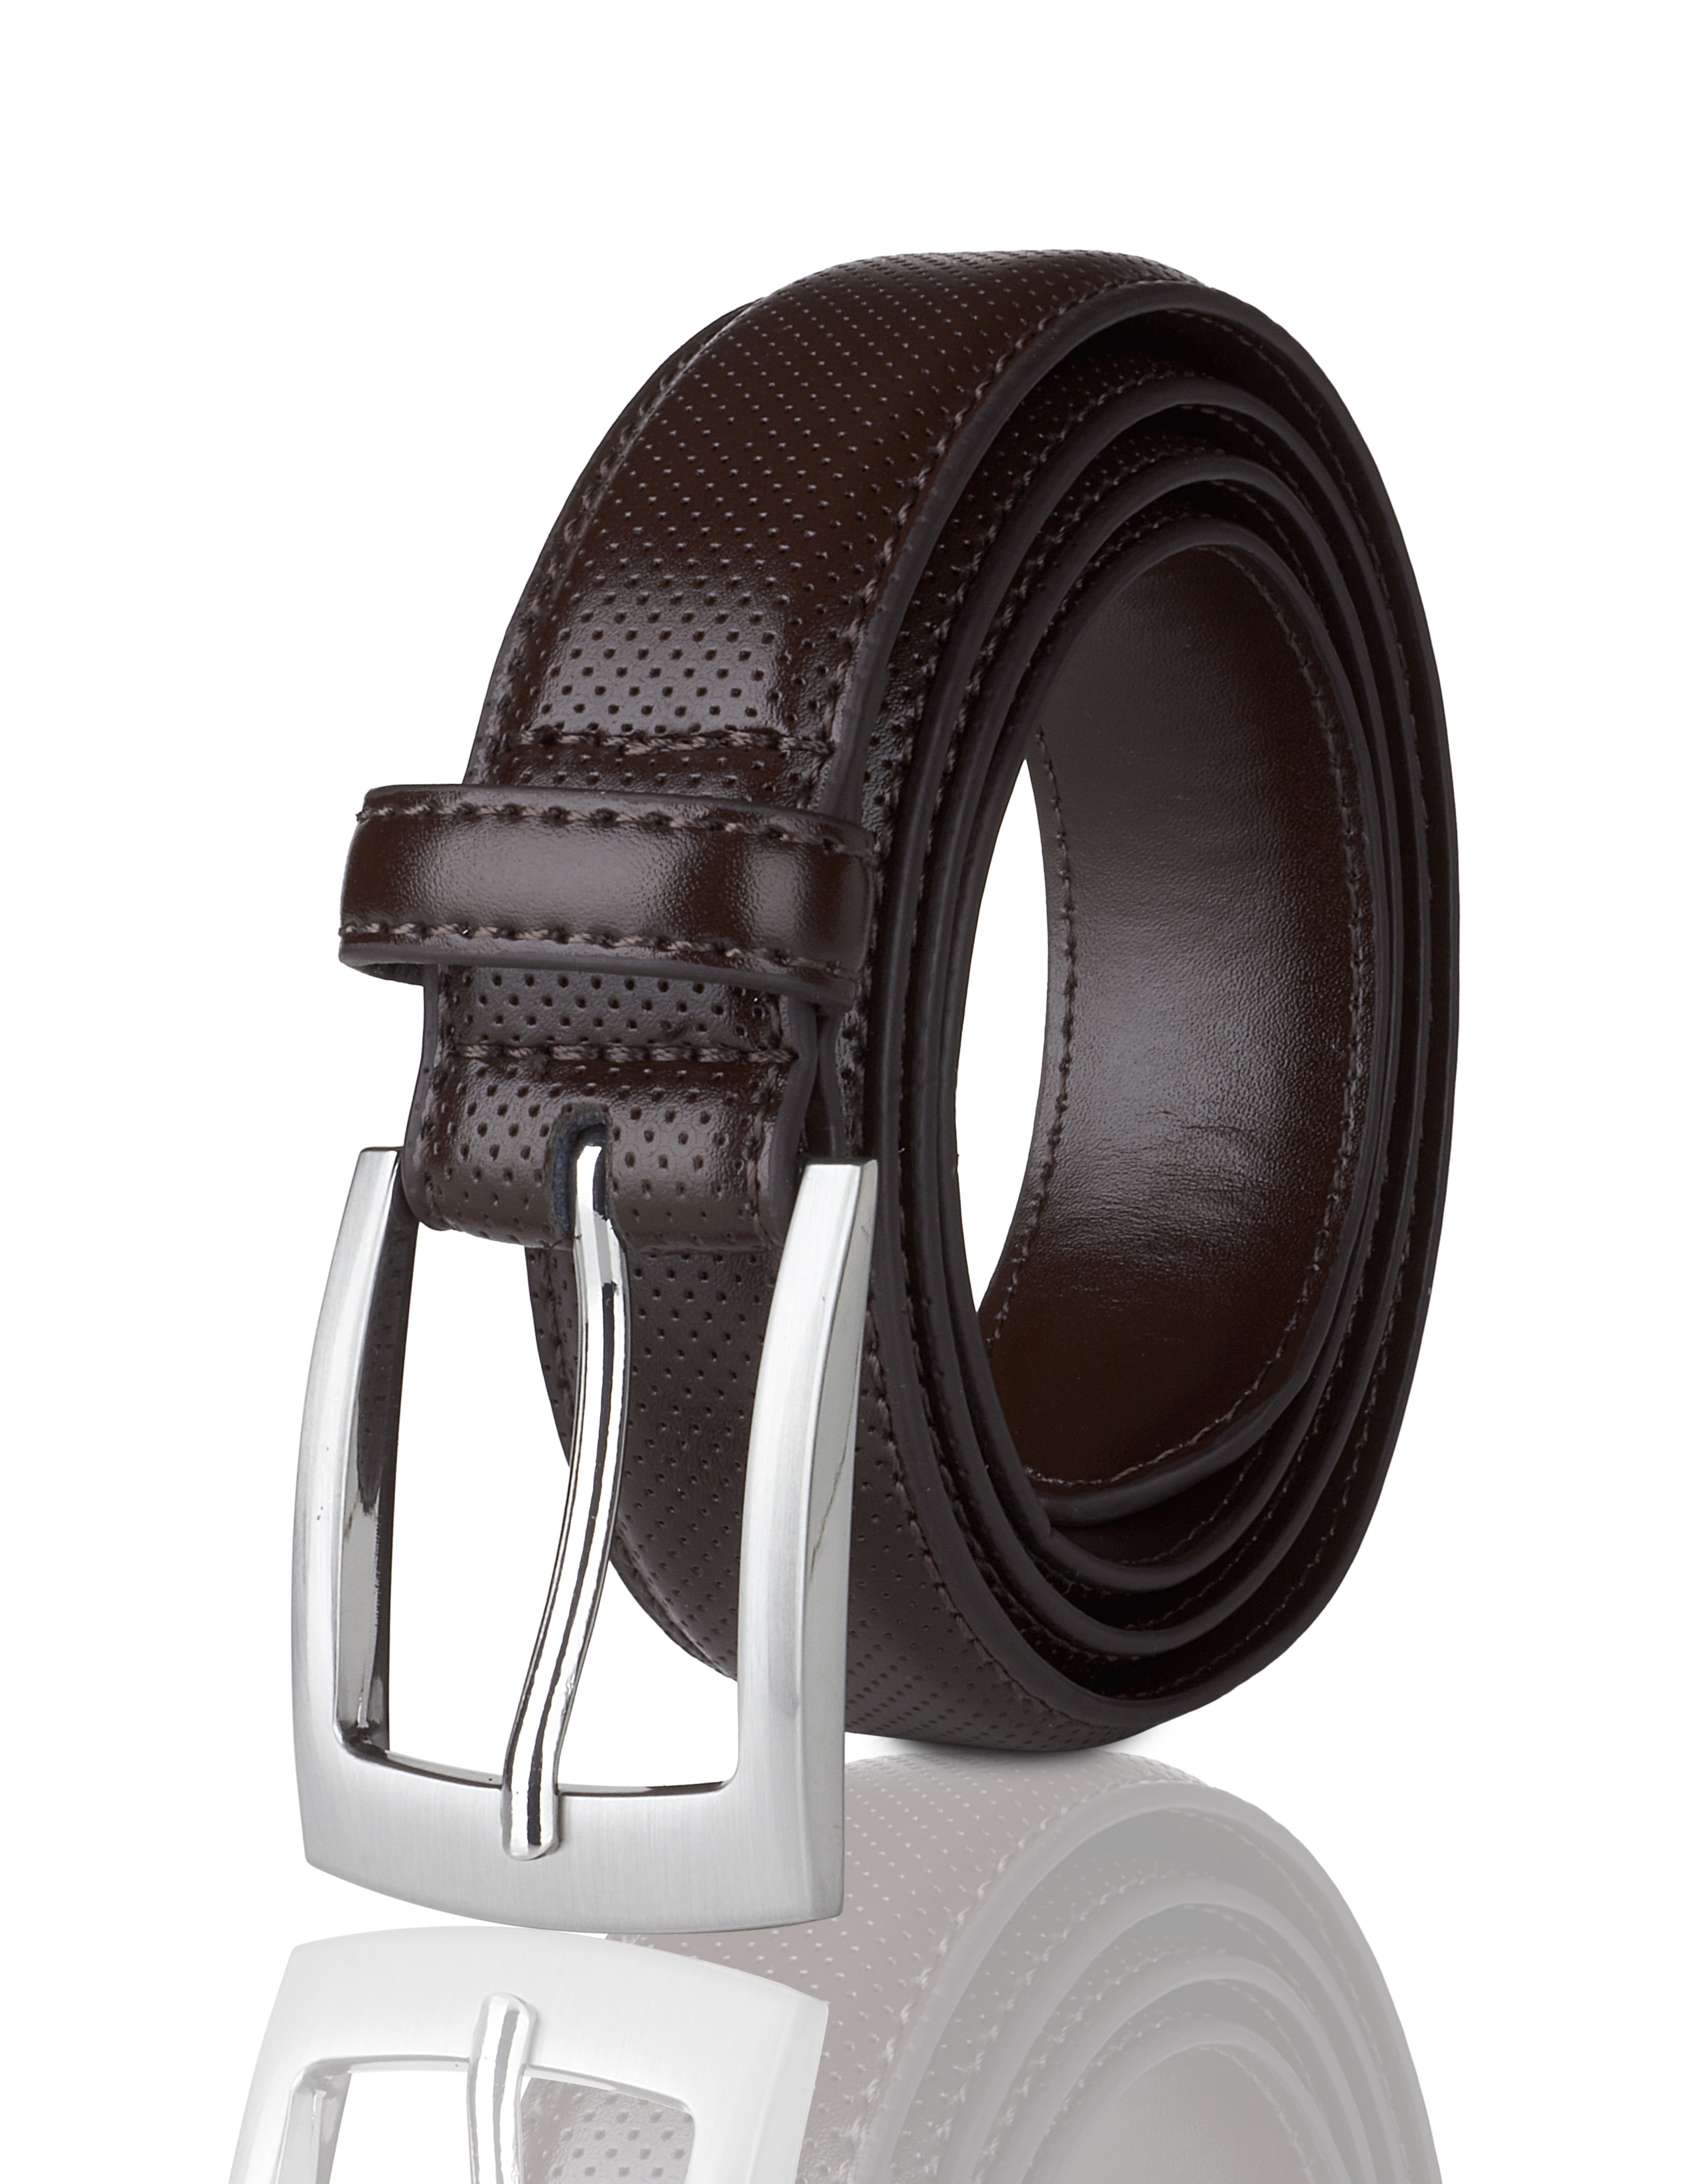 Lvelia 35mm Genuine Leather Dress Belts for Men-Mens Belt for Suits, Jeans,  Uniform with Automatic Buckle, Black 